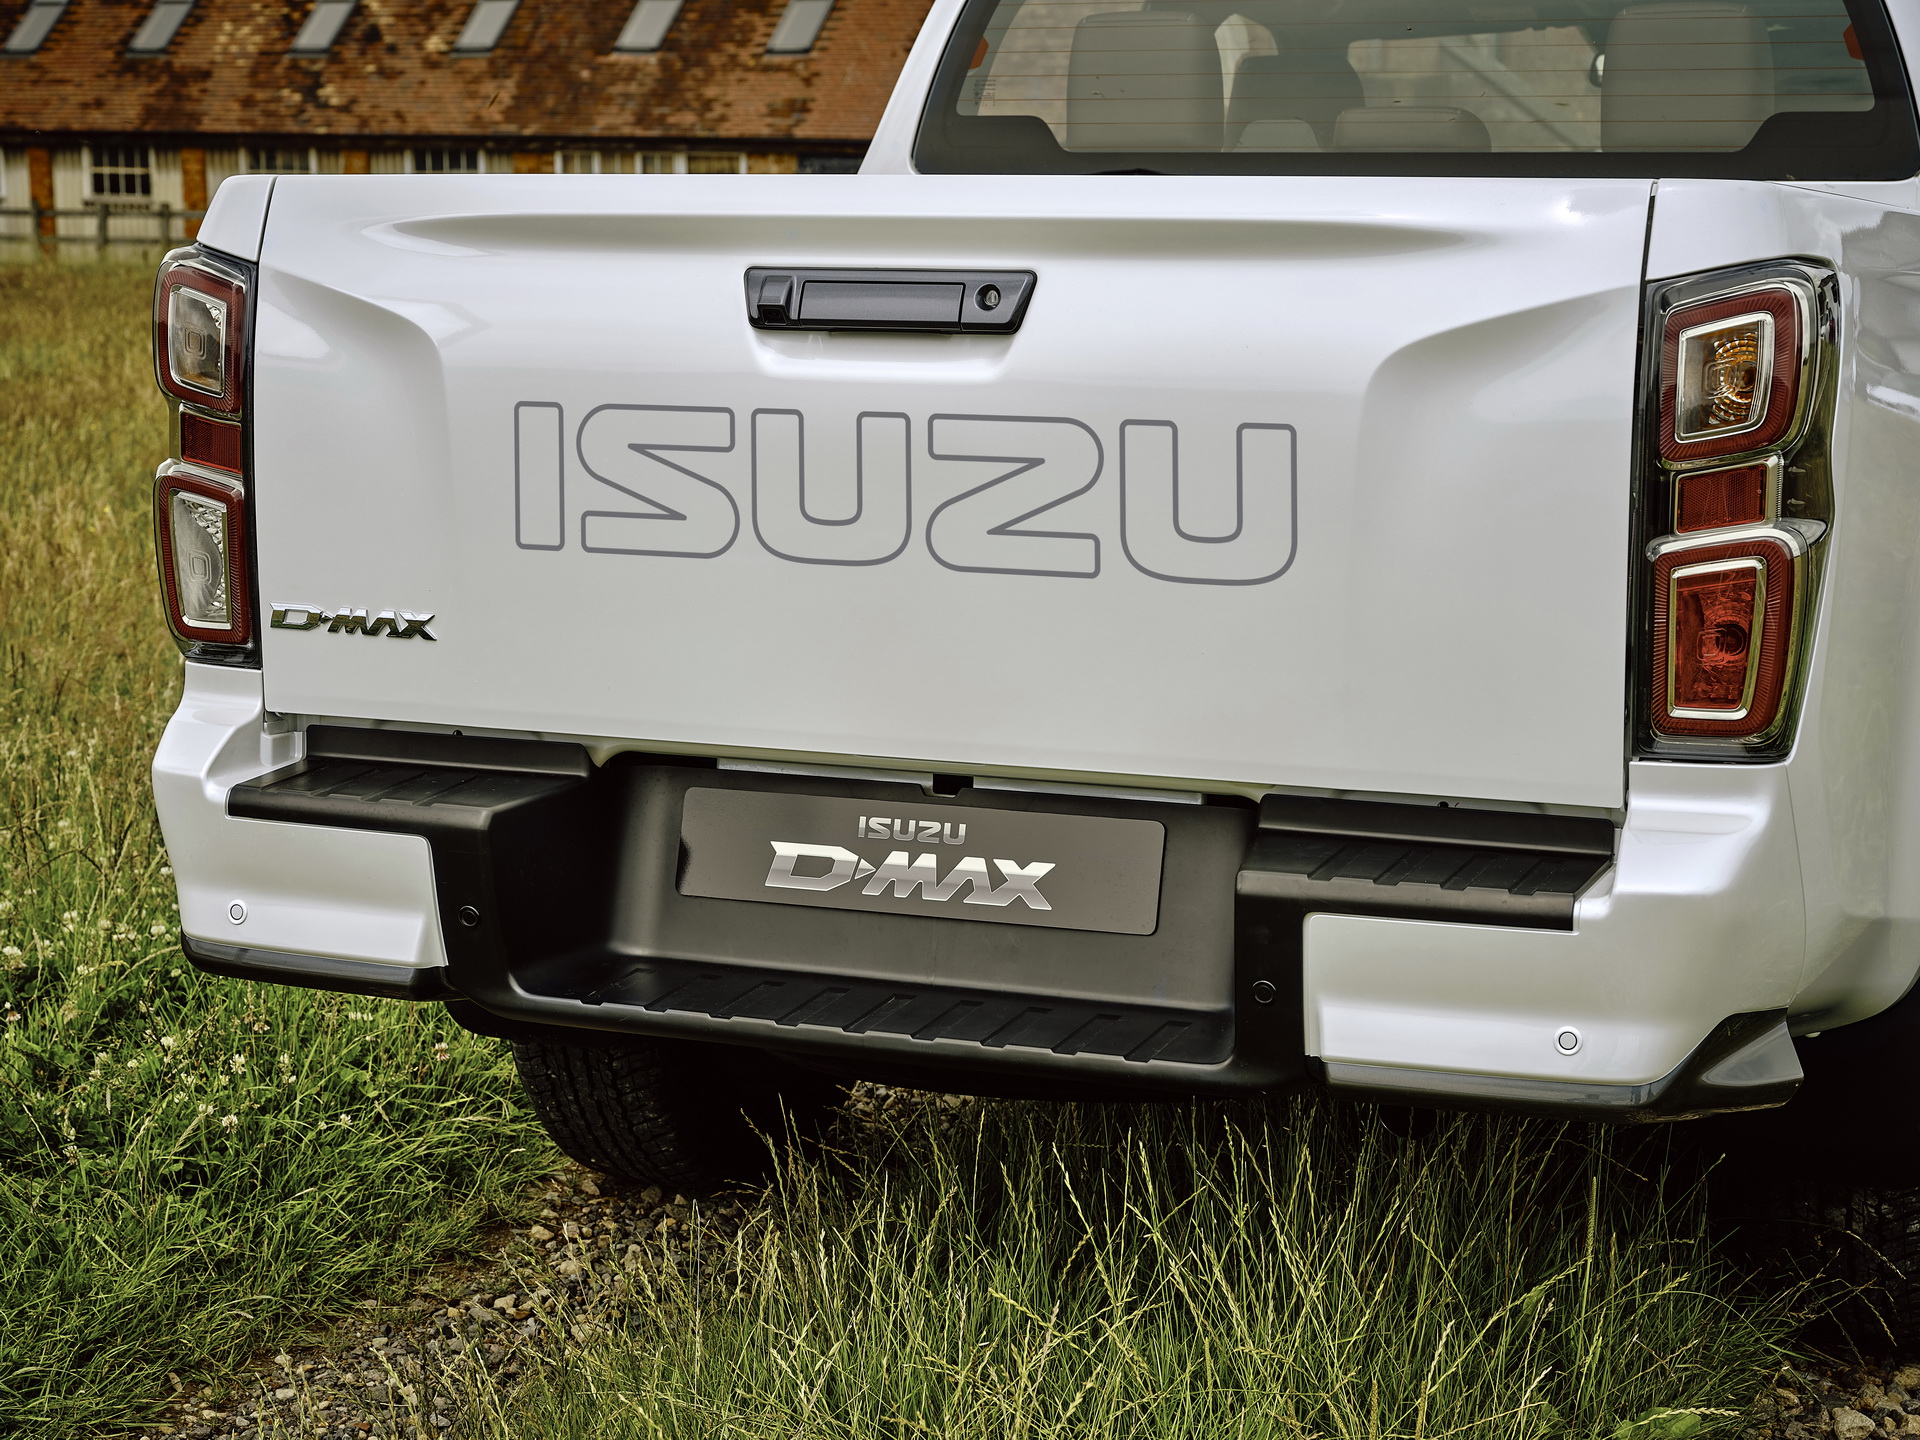 Isuzu D-Max 2021 hoàn toàn mới chốt giá từ 29.479 USD 2021-isuzu-d-max-uk-5.jpg